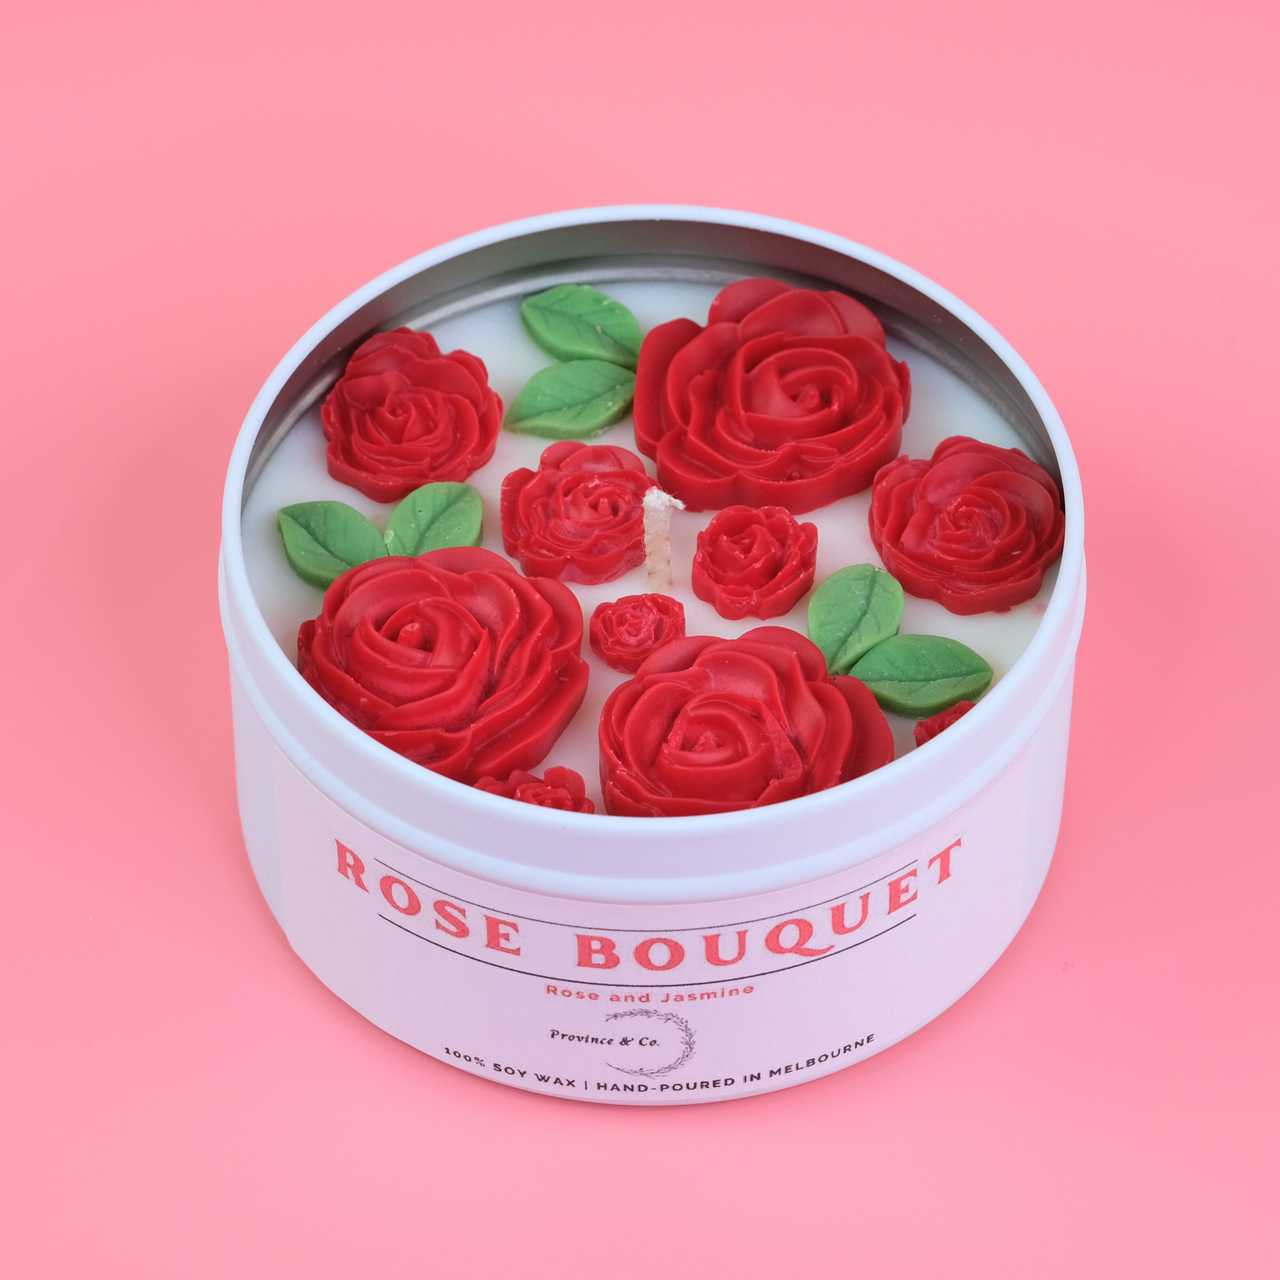 Rose Bouquet | Rose + Jasmine